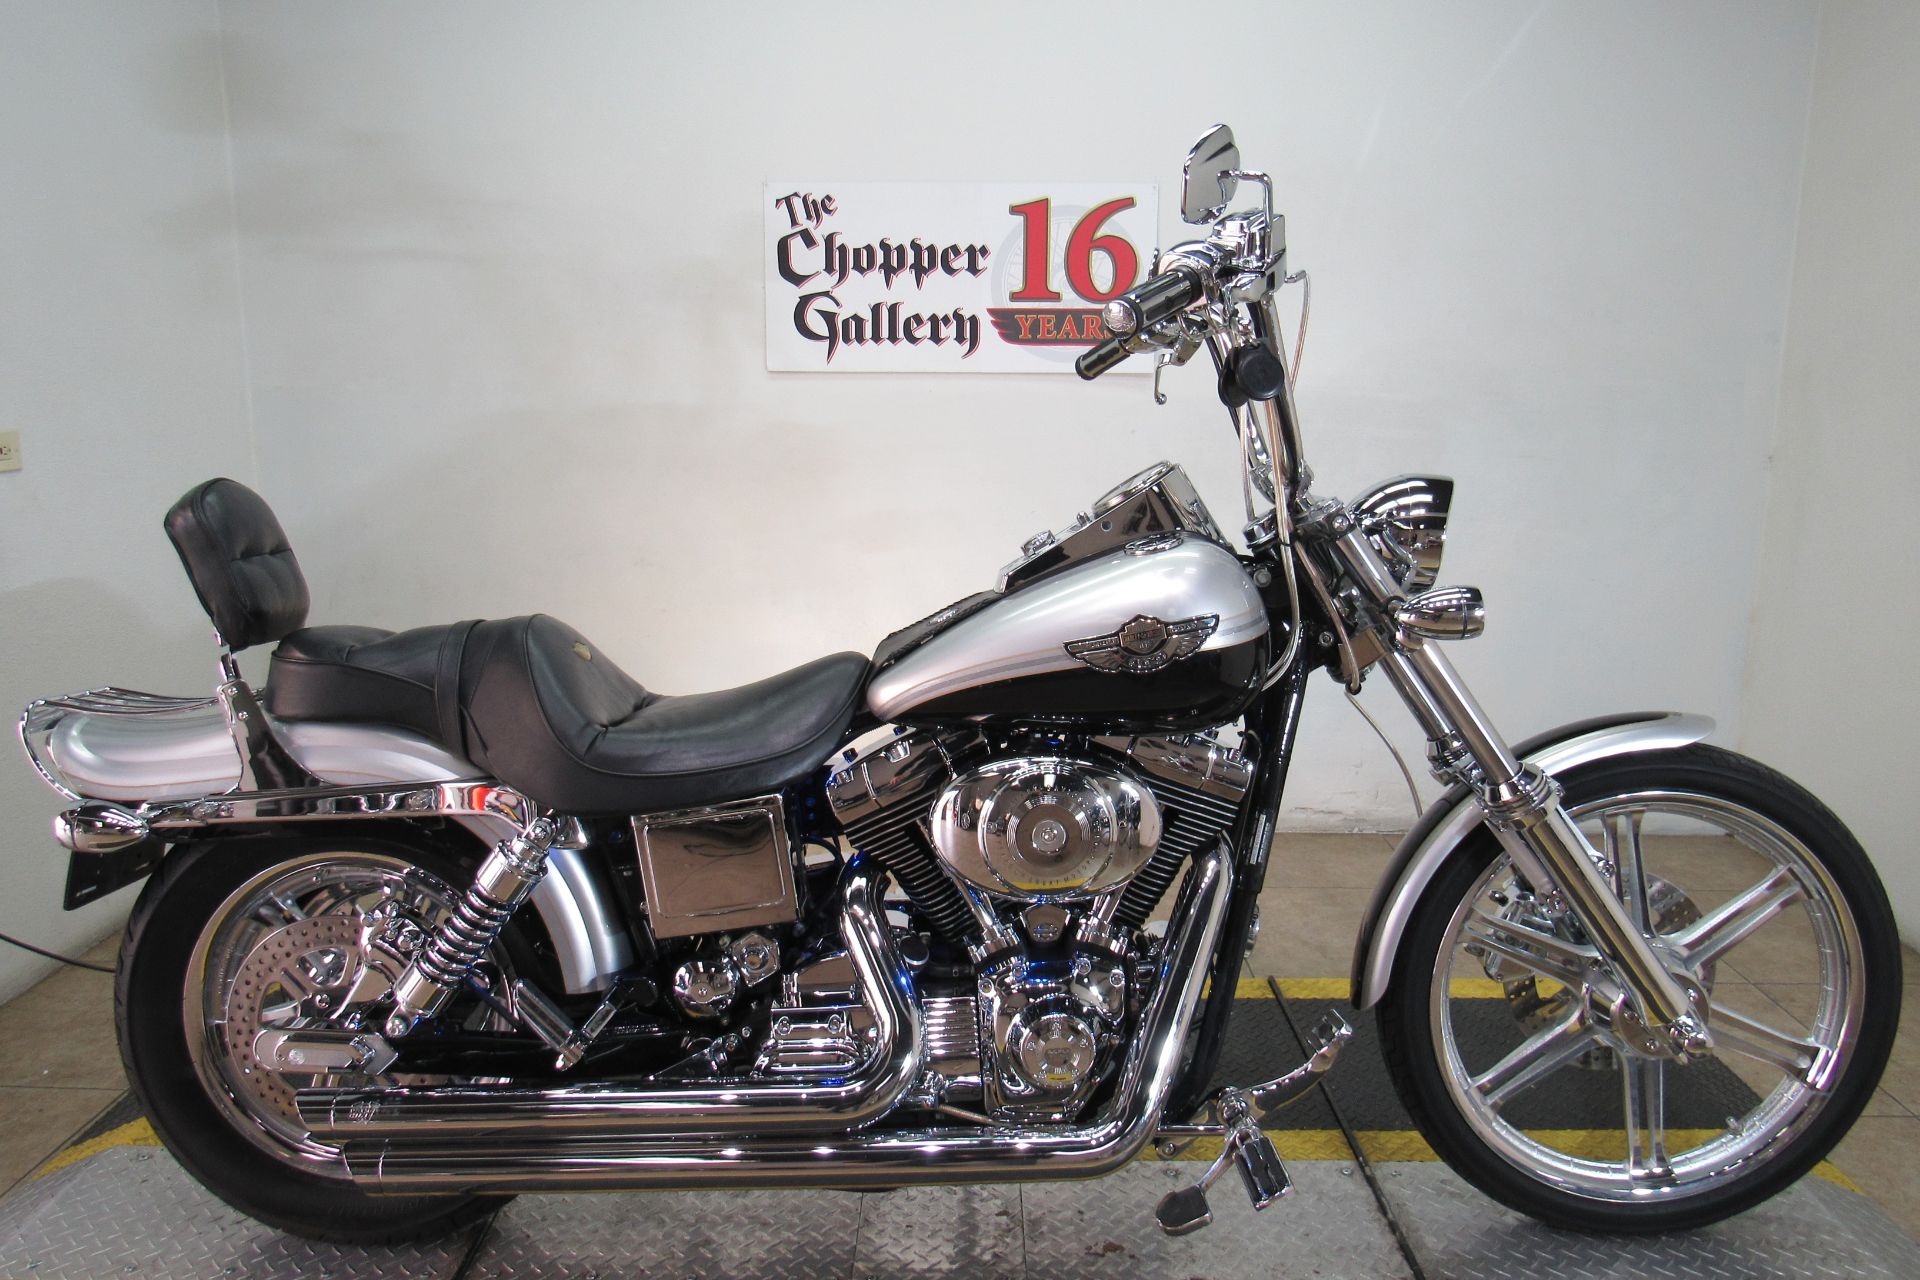 2003 Harley-Davidson FXDWG Dyna Wide Glide® in Temecula, California - Photo 1